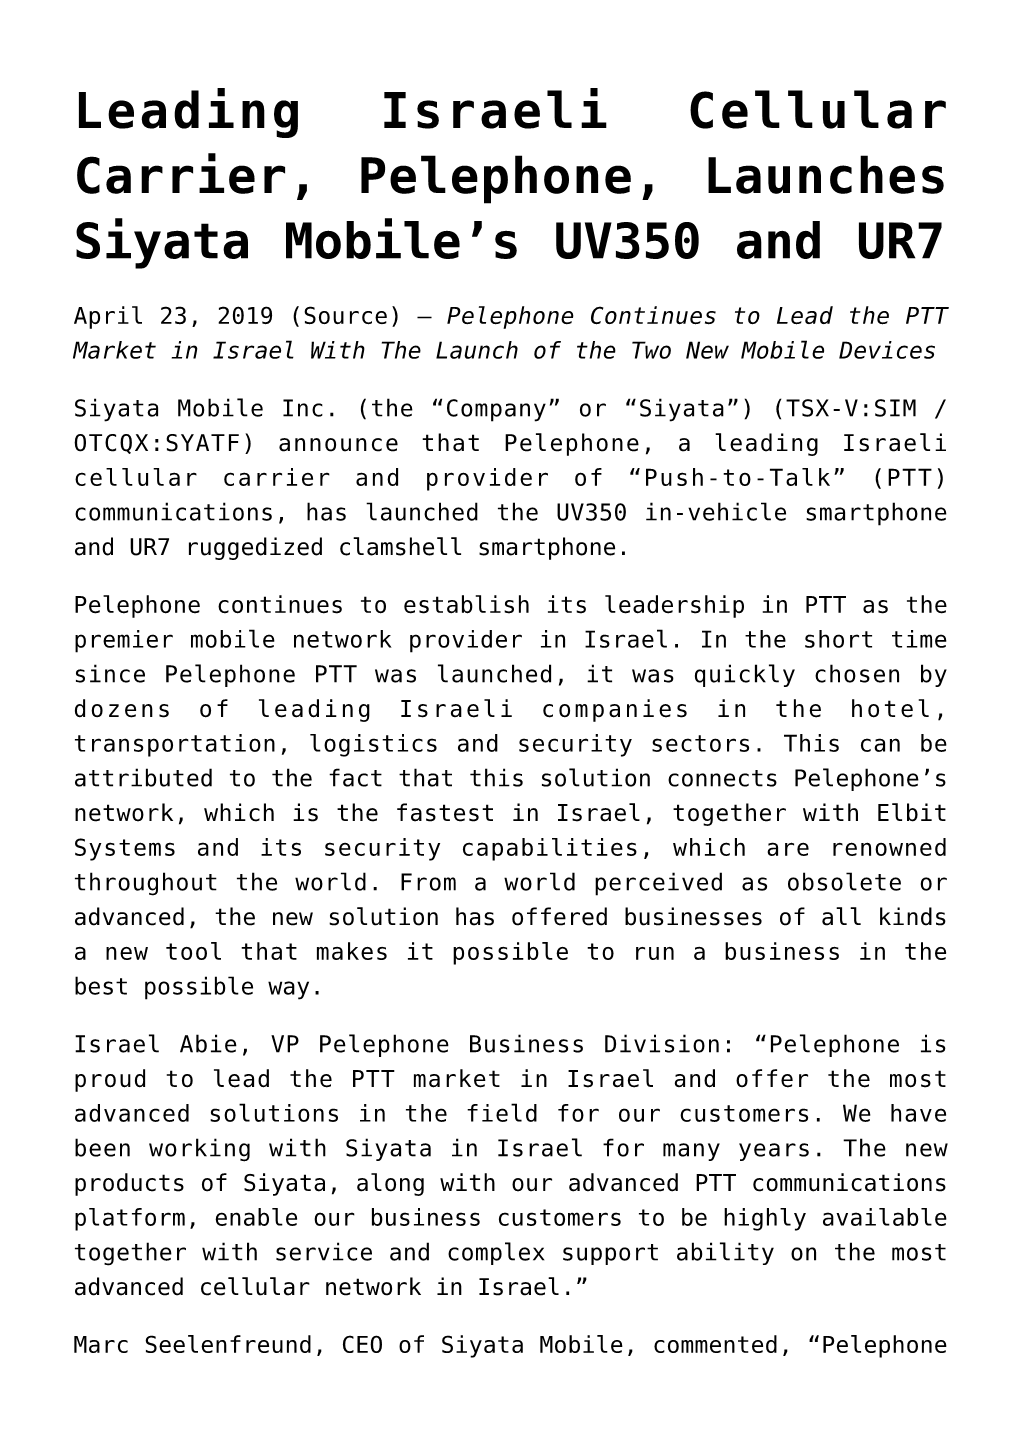 Leading Israeli Cellular Carrier, Pelephone, Launches Siyata Mobile’S UV350 and UR7